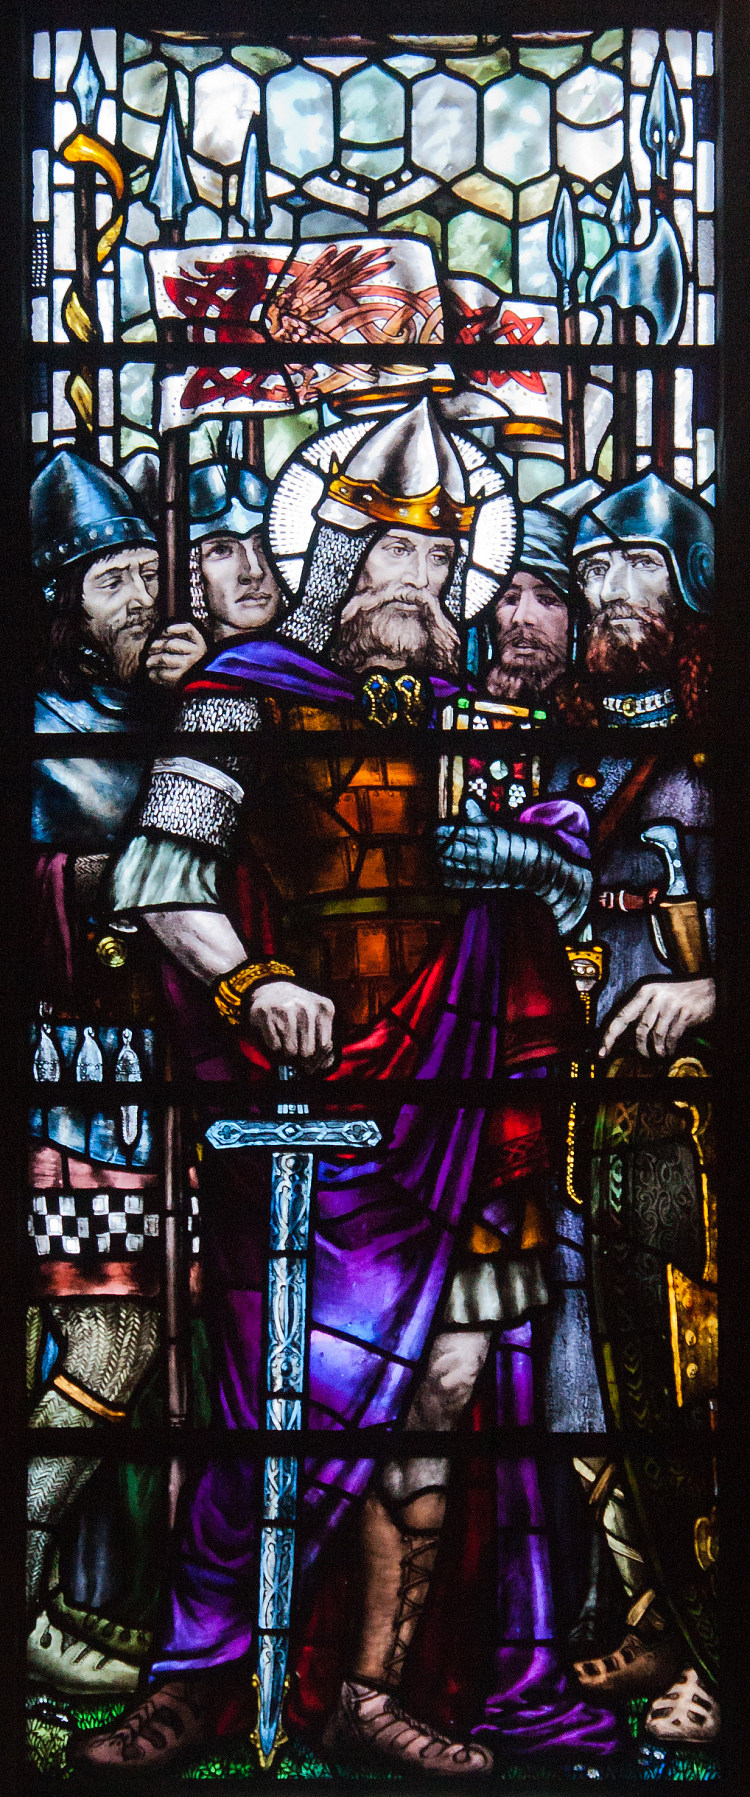 卡舍尔国王科马克（King Cormac of Cashel）担任主教、战士和抄写员。都柏林圣帕特里克大教堂（局部） King Cormac of Cashel as Bishop, Warrior and Scribe. St. Patrick's Cathedral in Dublin (detail) (c.1906)，莎拉·普瑟